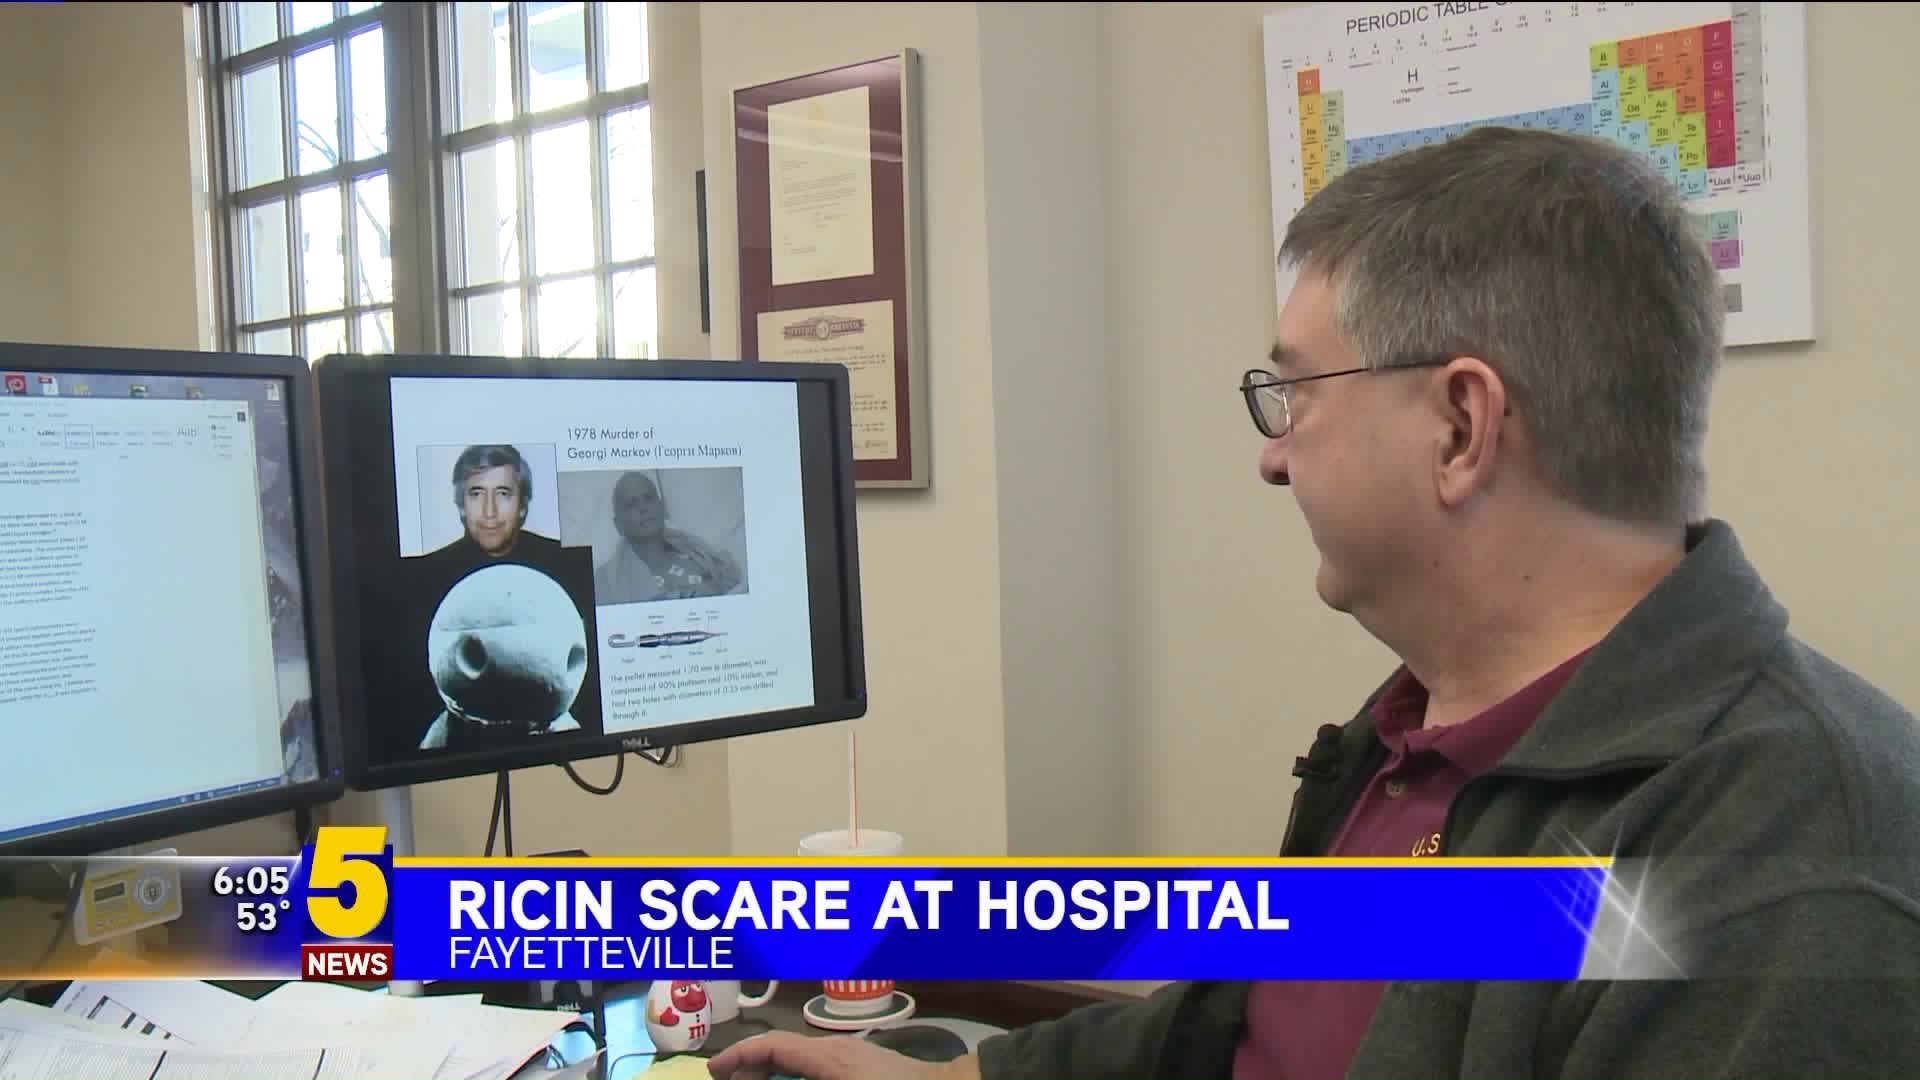 Ricin Scare At Hospital